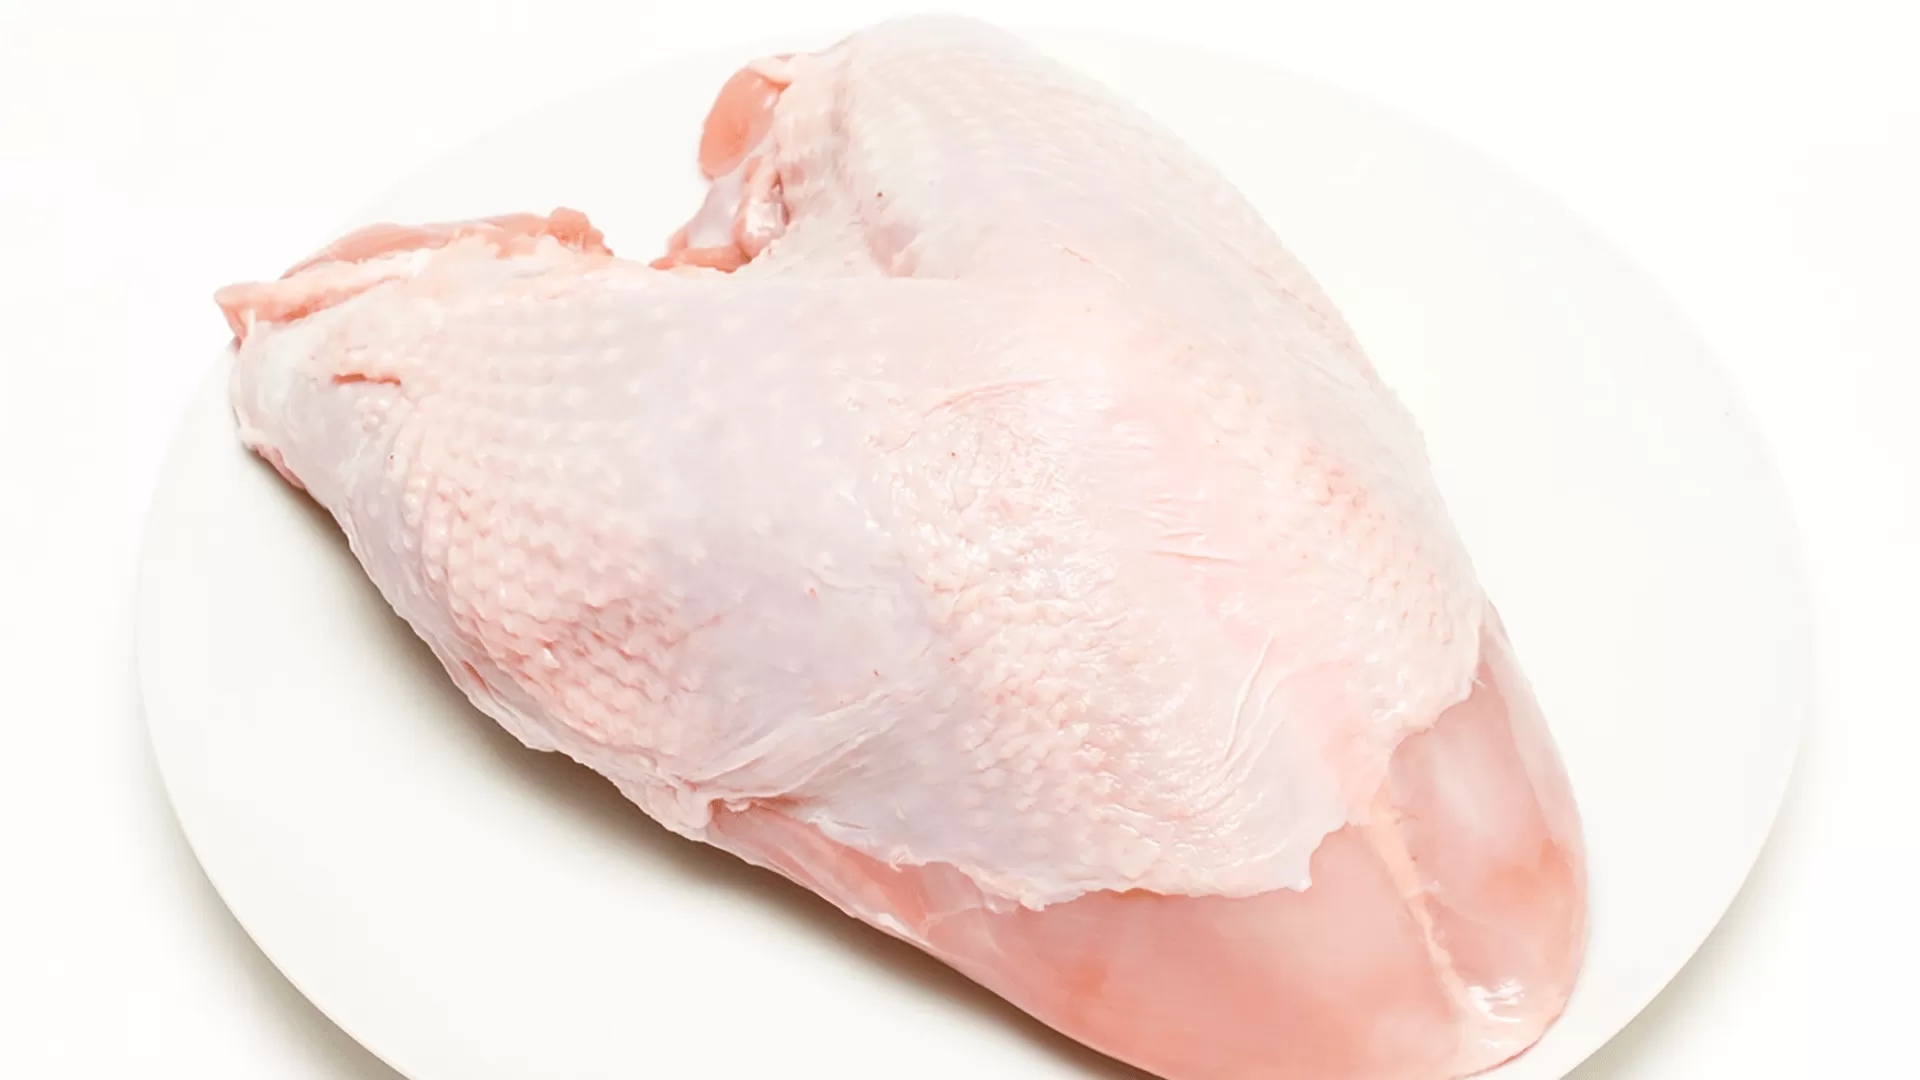 Whole Chicken Breast